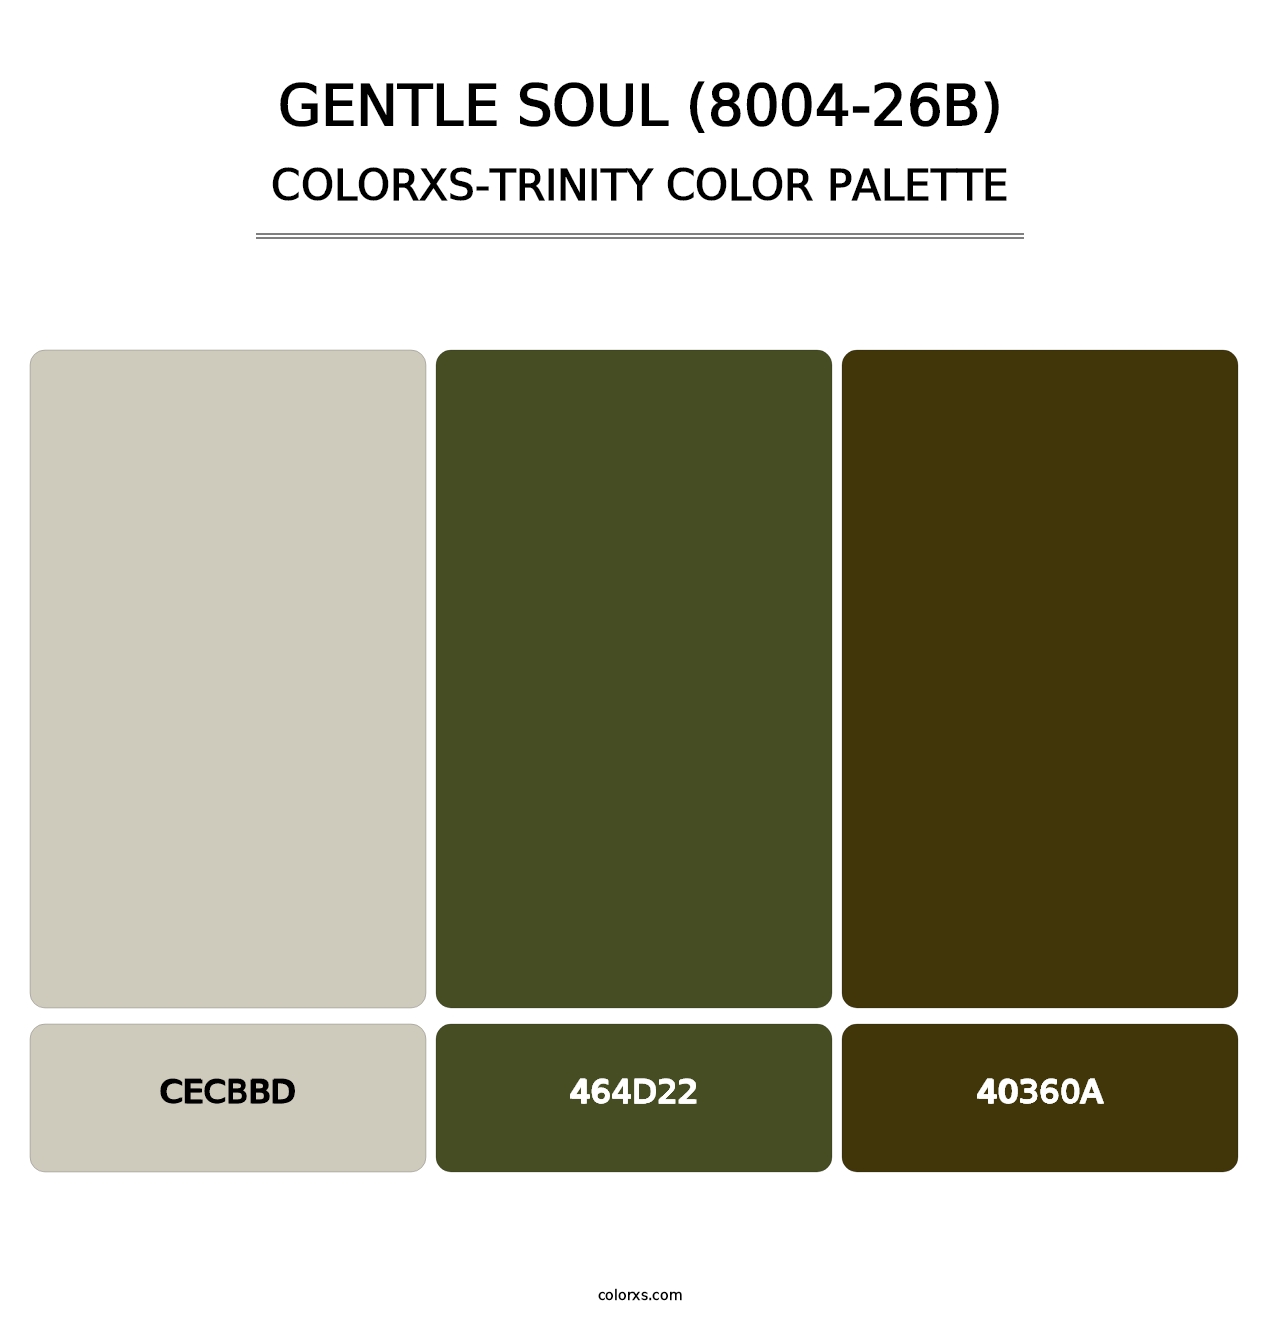 Gentle Soul (8004-26B) - Colorxs Trinity Palette